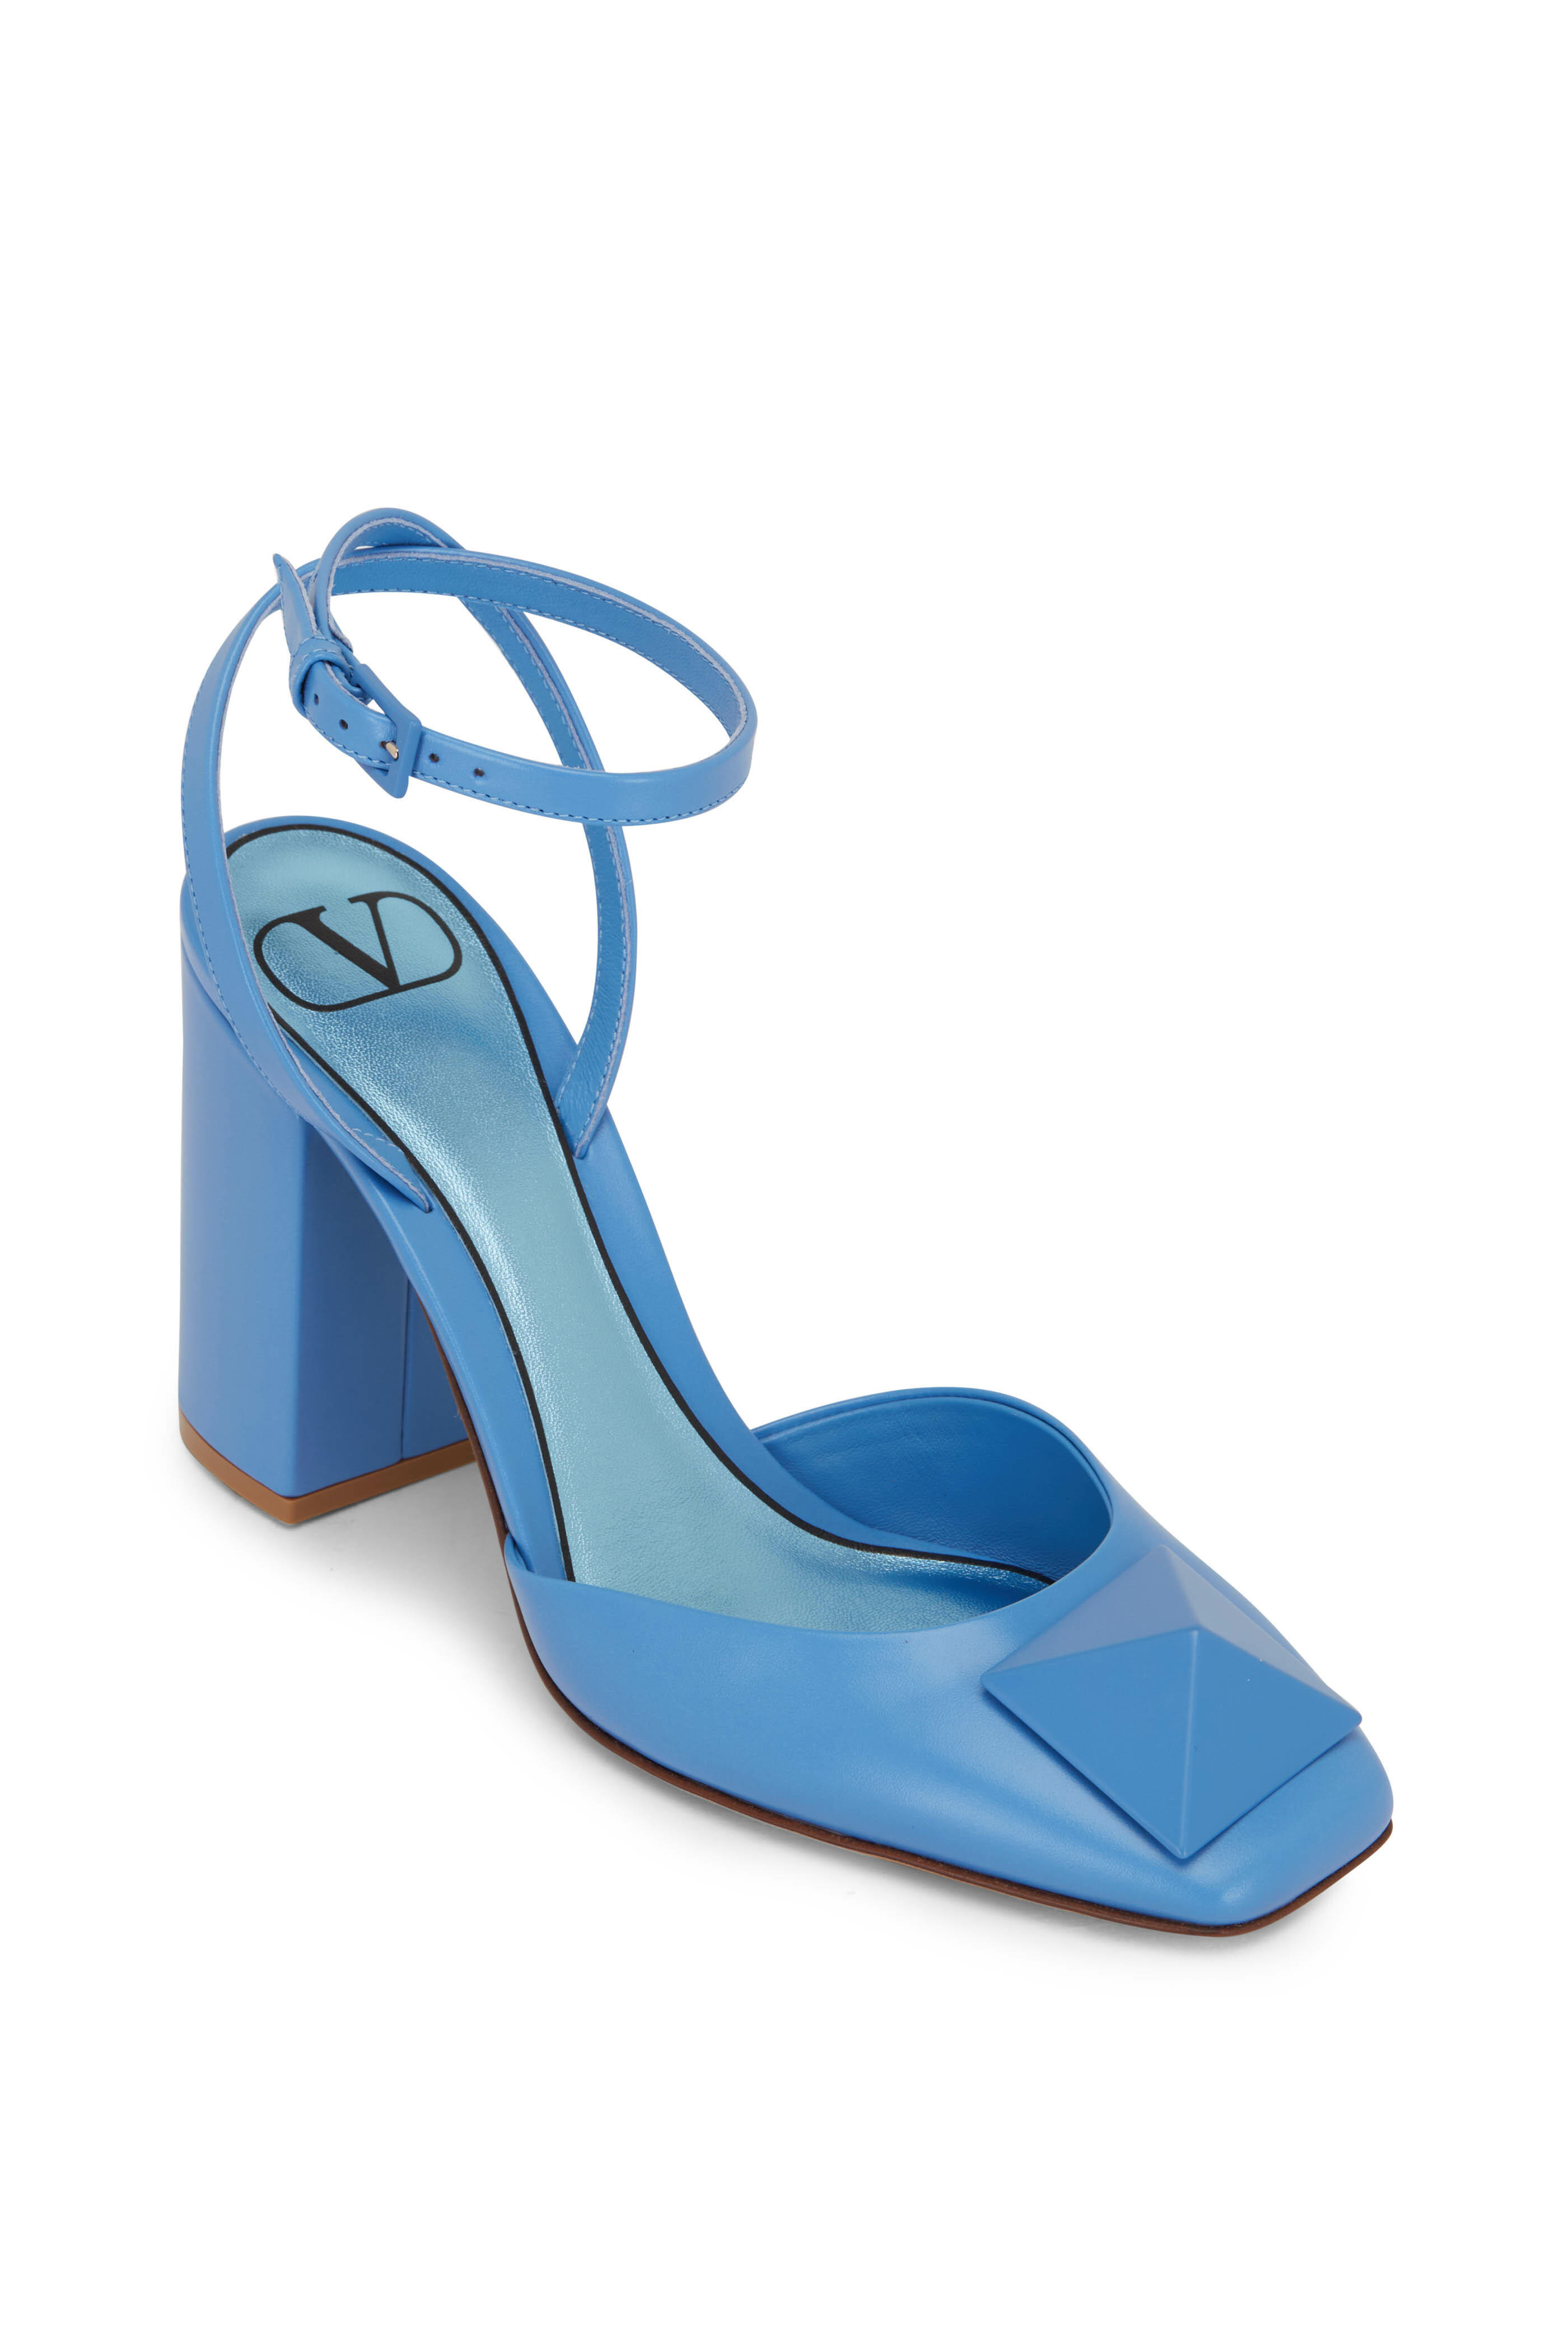 Zara - Bucked Denim Slingback Shoes - Denim Blue - Women